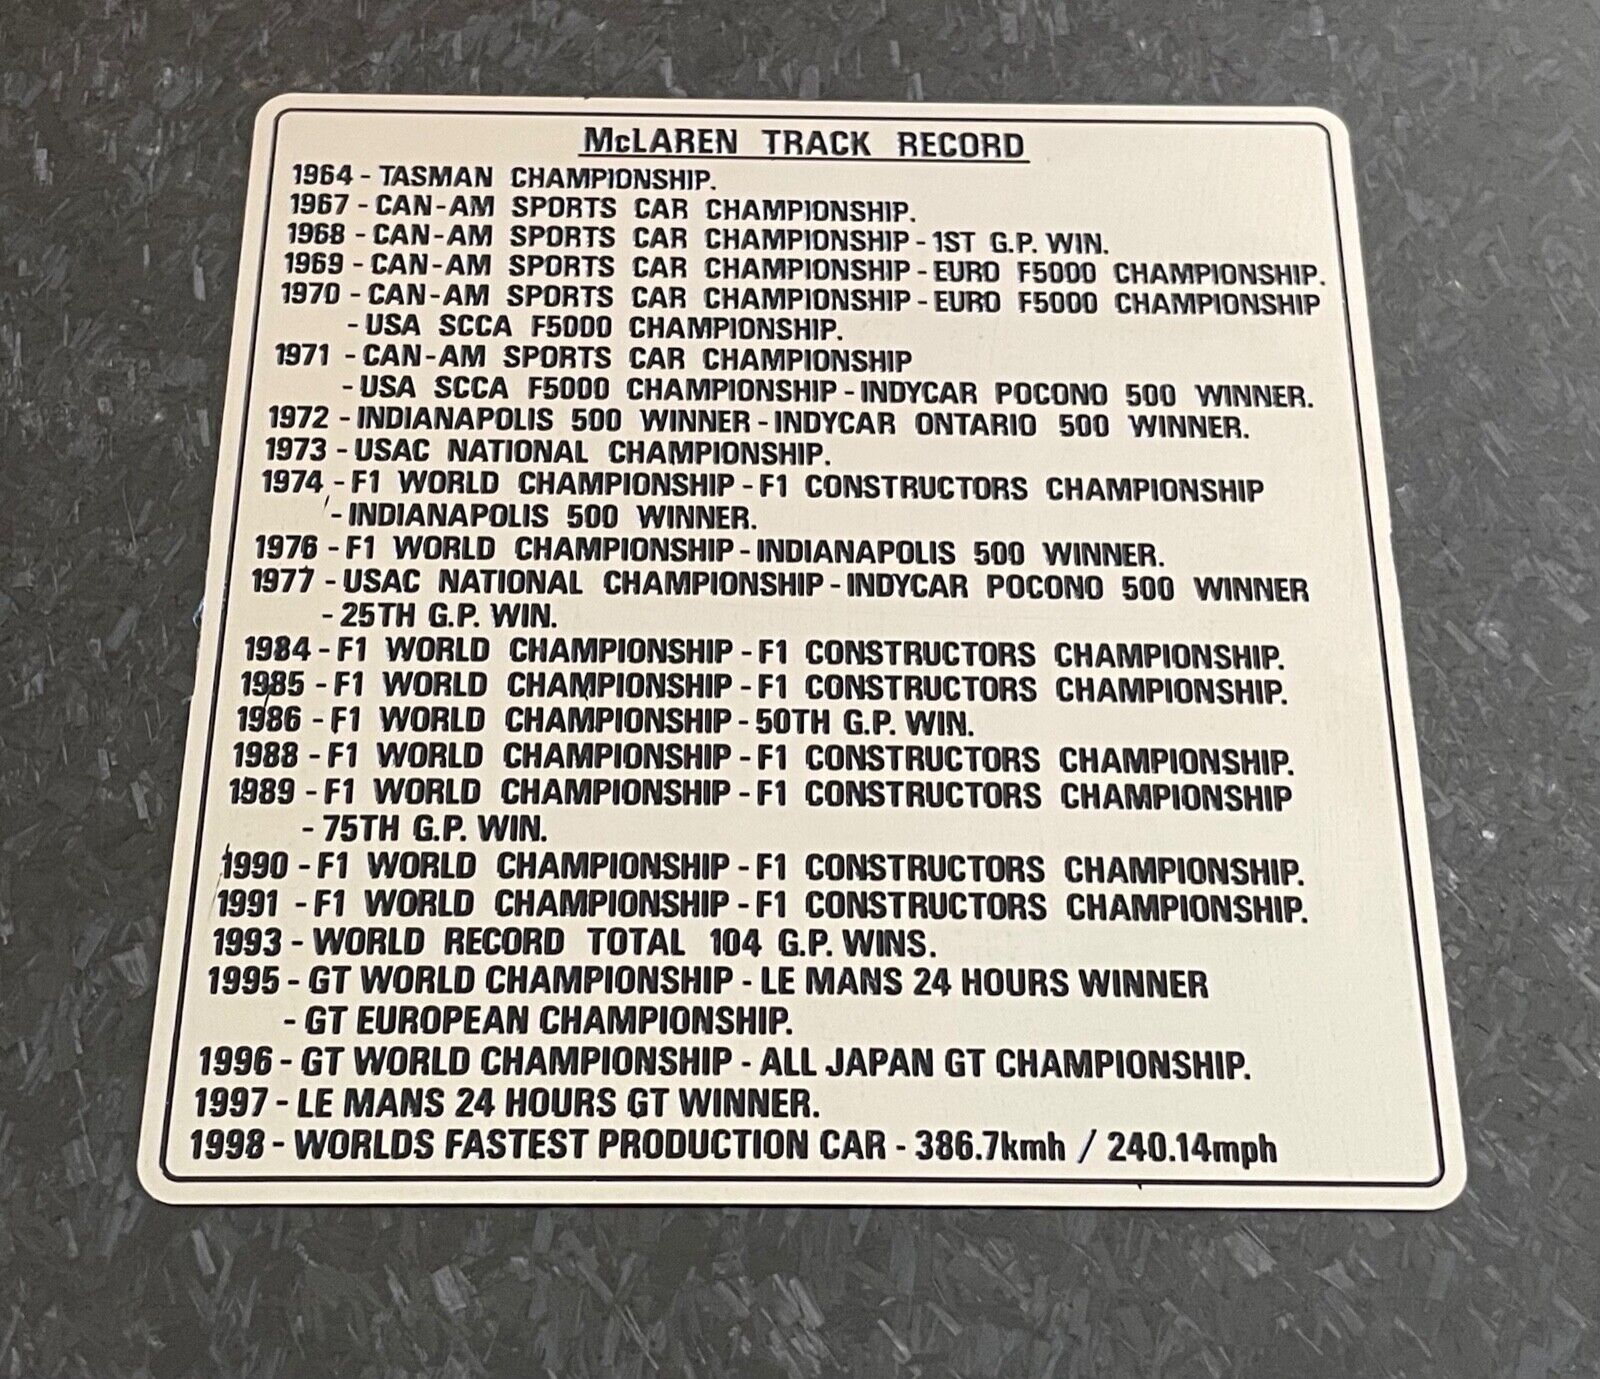 1998 Mclaren F1 Track Record Dedication Plate Emblem Plaque Rare Collectible 